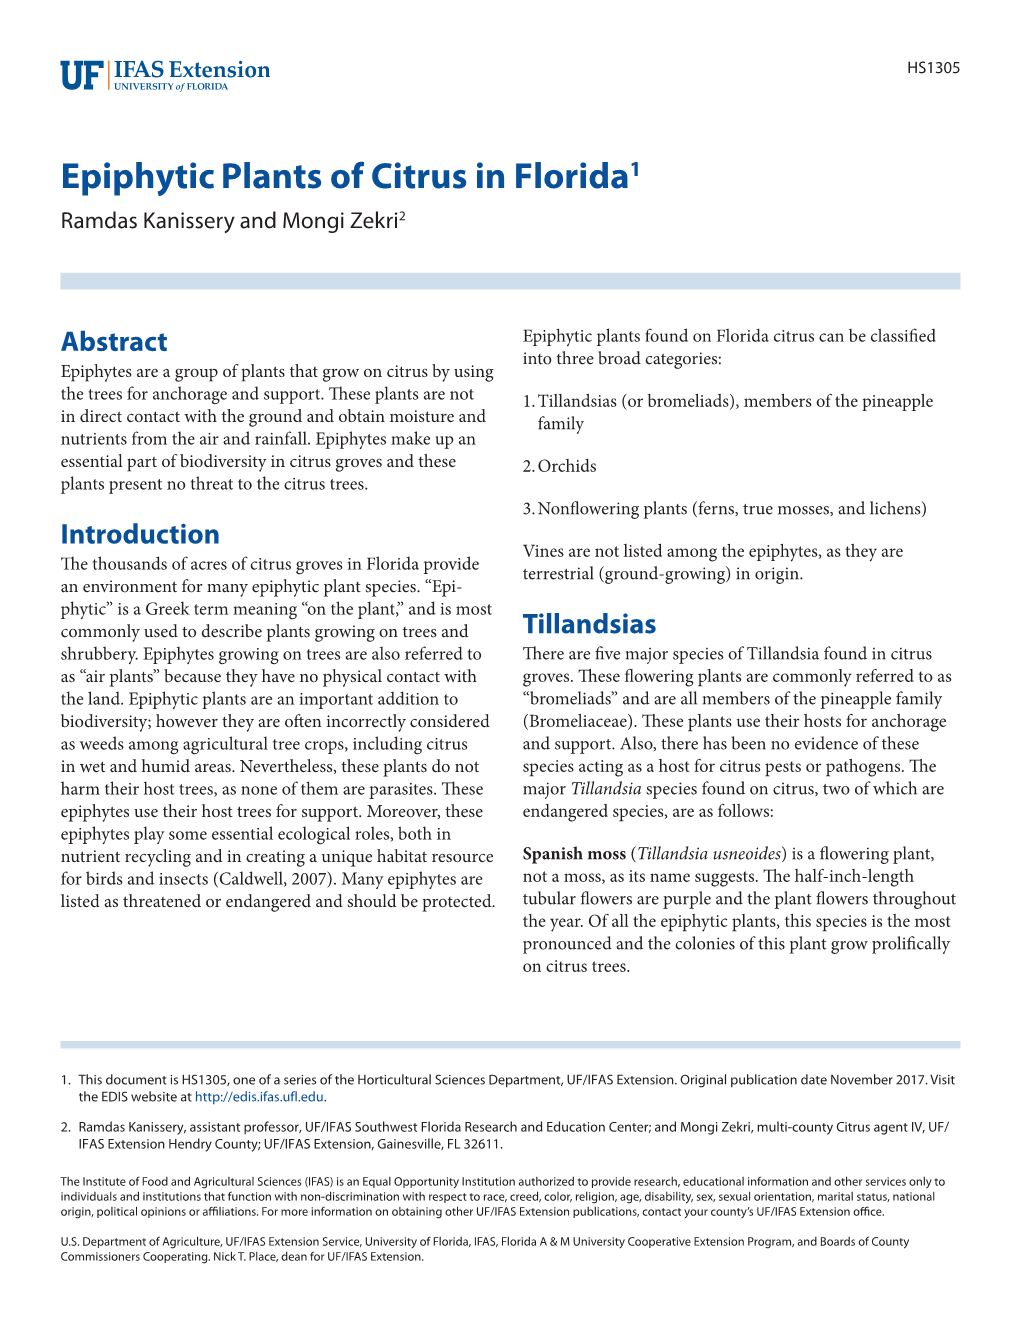 Epiphytic Plants of Citrus in Florida1 Ramdas Kanissery and Mongi Zekri2